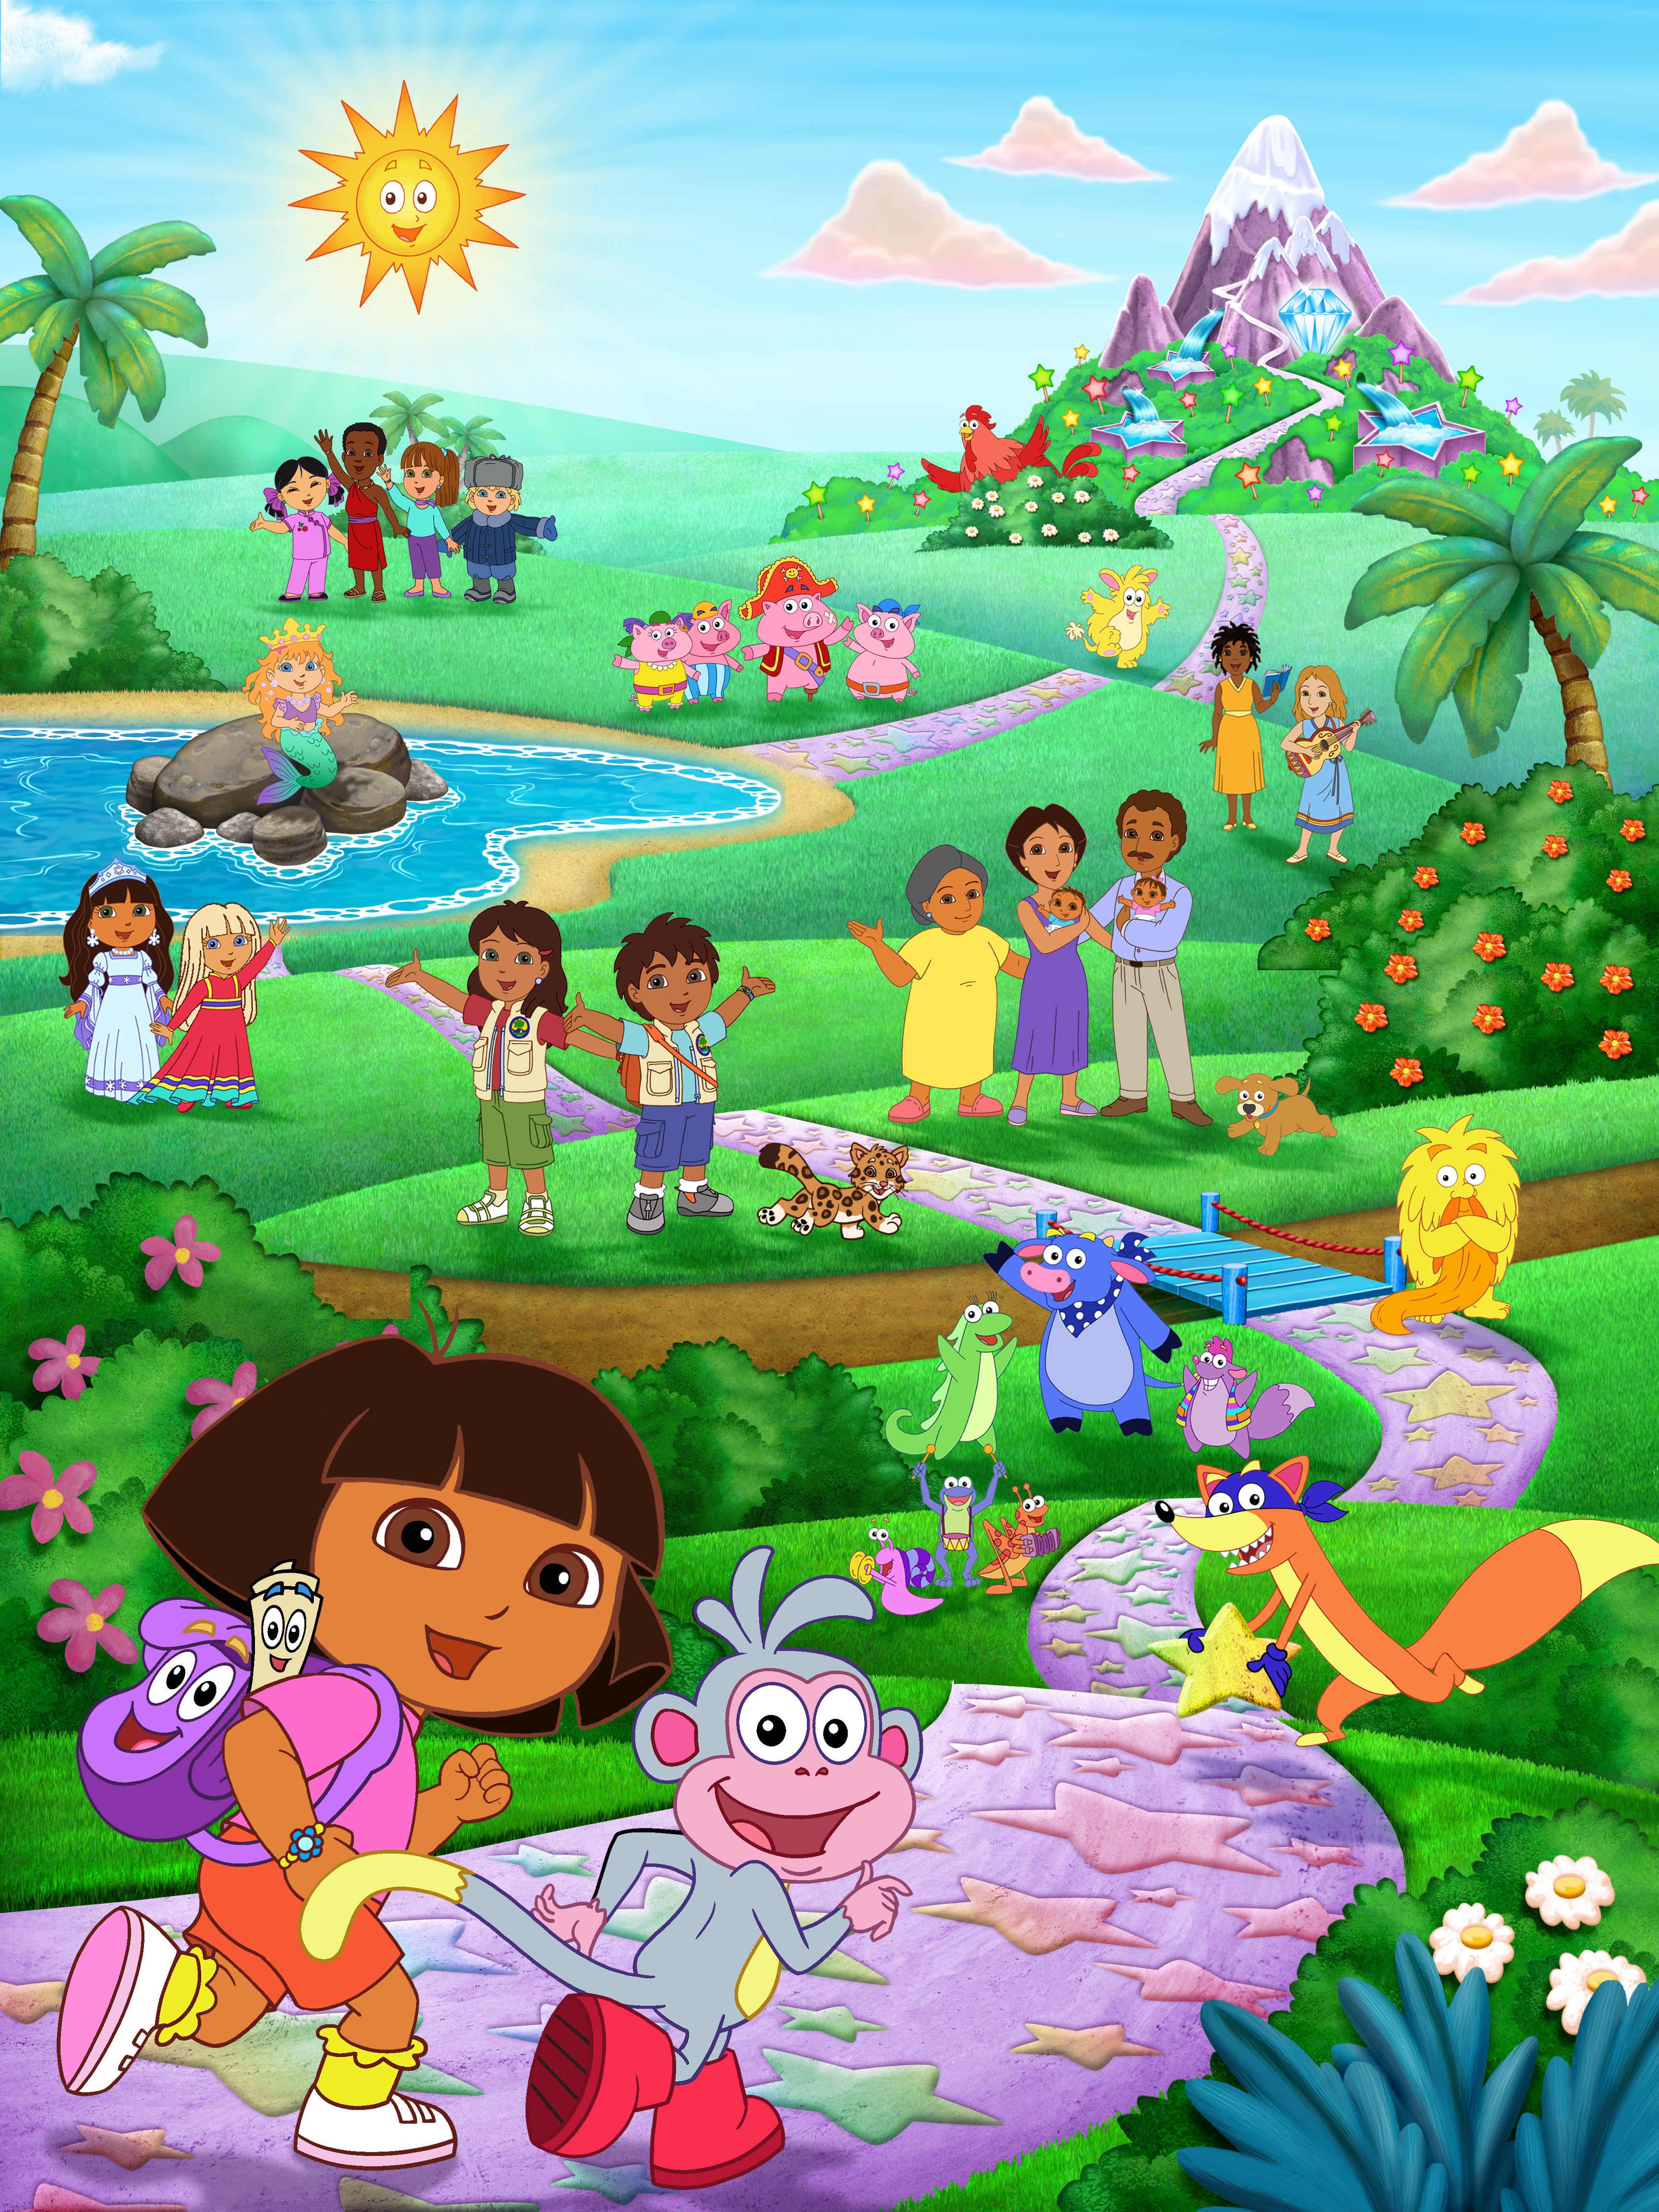 Dora the Explorer 10th Anniversary Wallpaper For Free Download ...